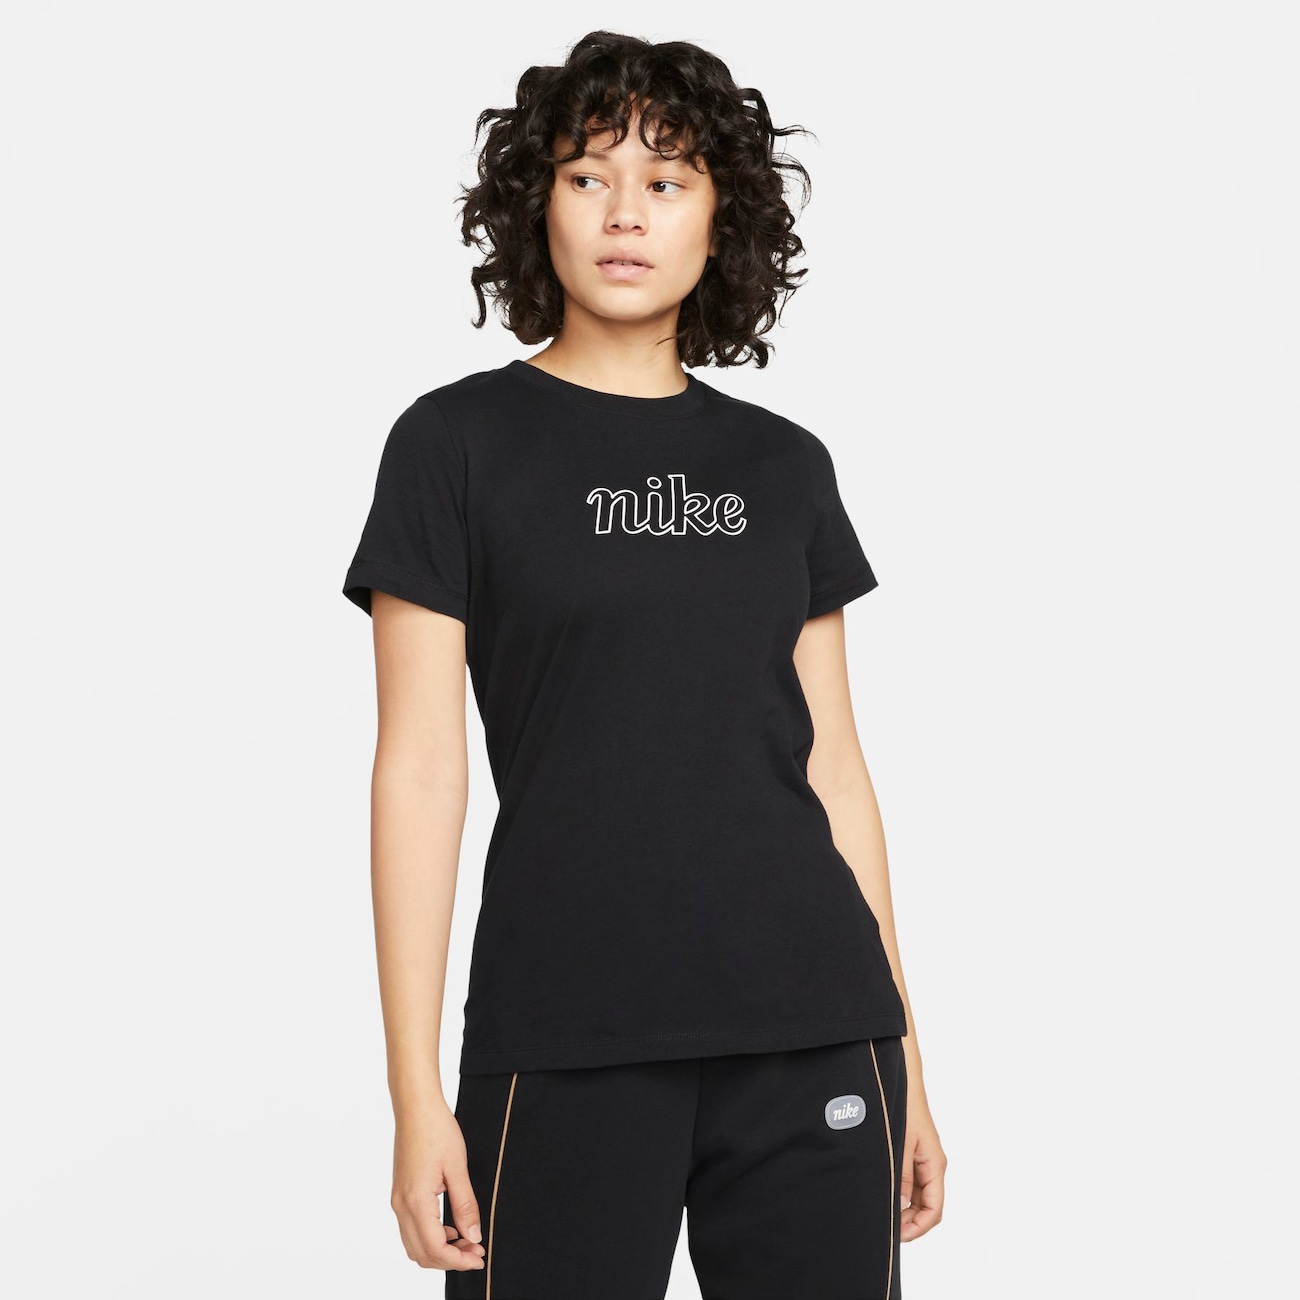 Camiseta Nike Sportswear Icon Clash Feminina - Nike